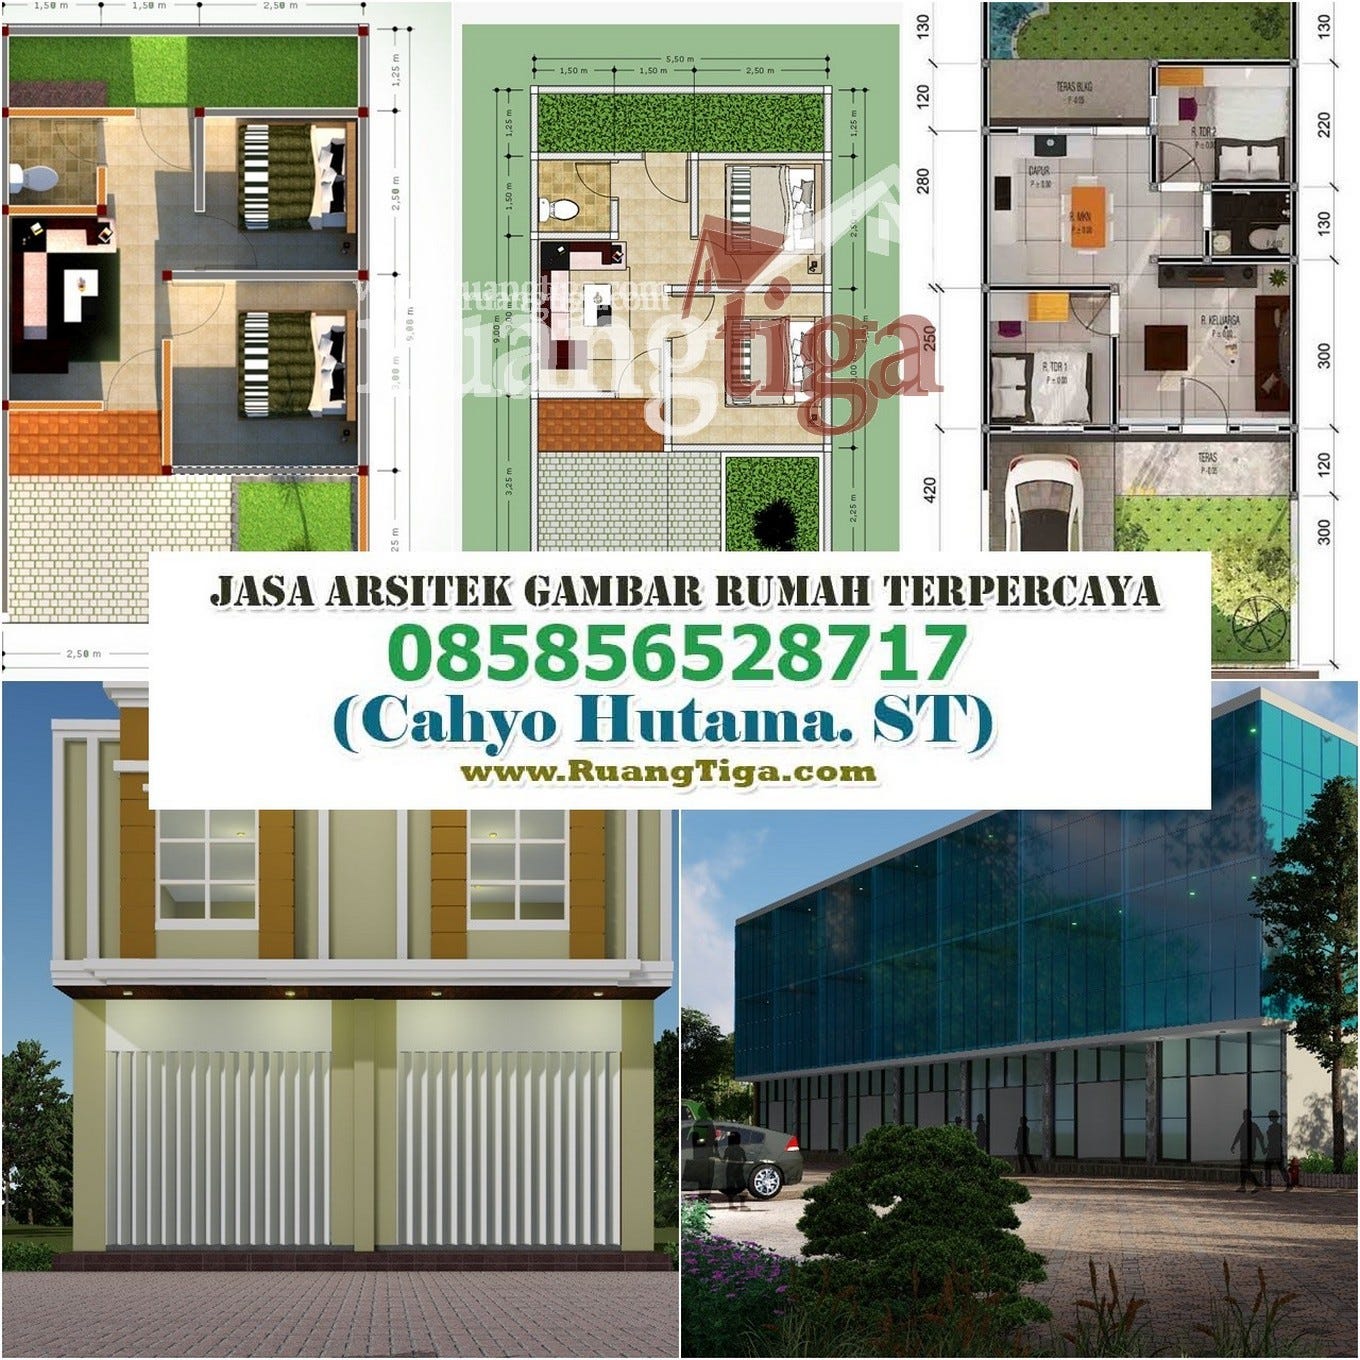 085856528717 Jasa Desain Rumah Minimalis 2 Lantai Profesional